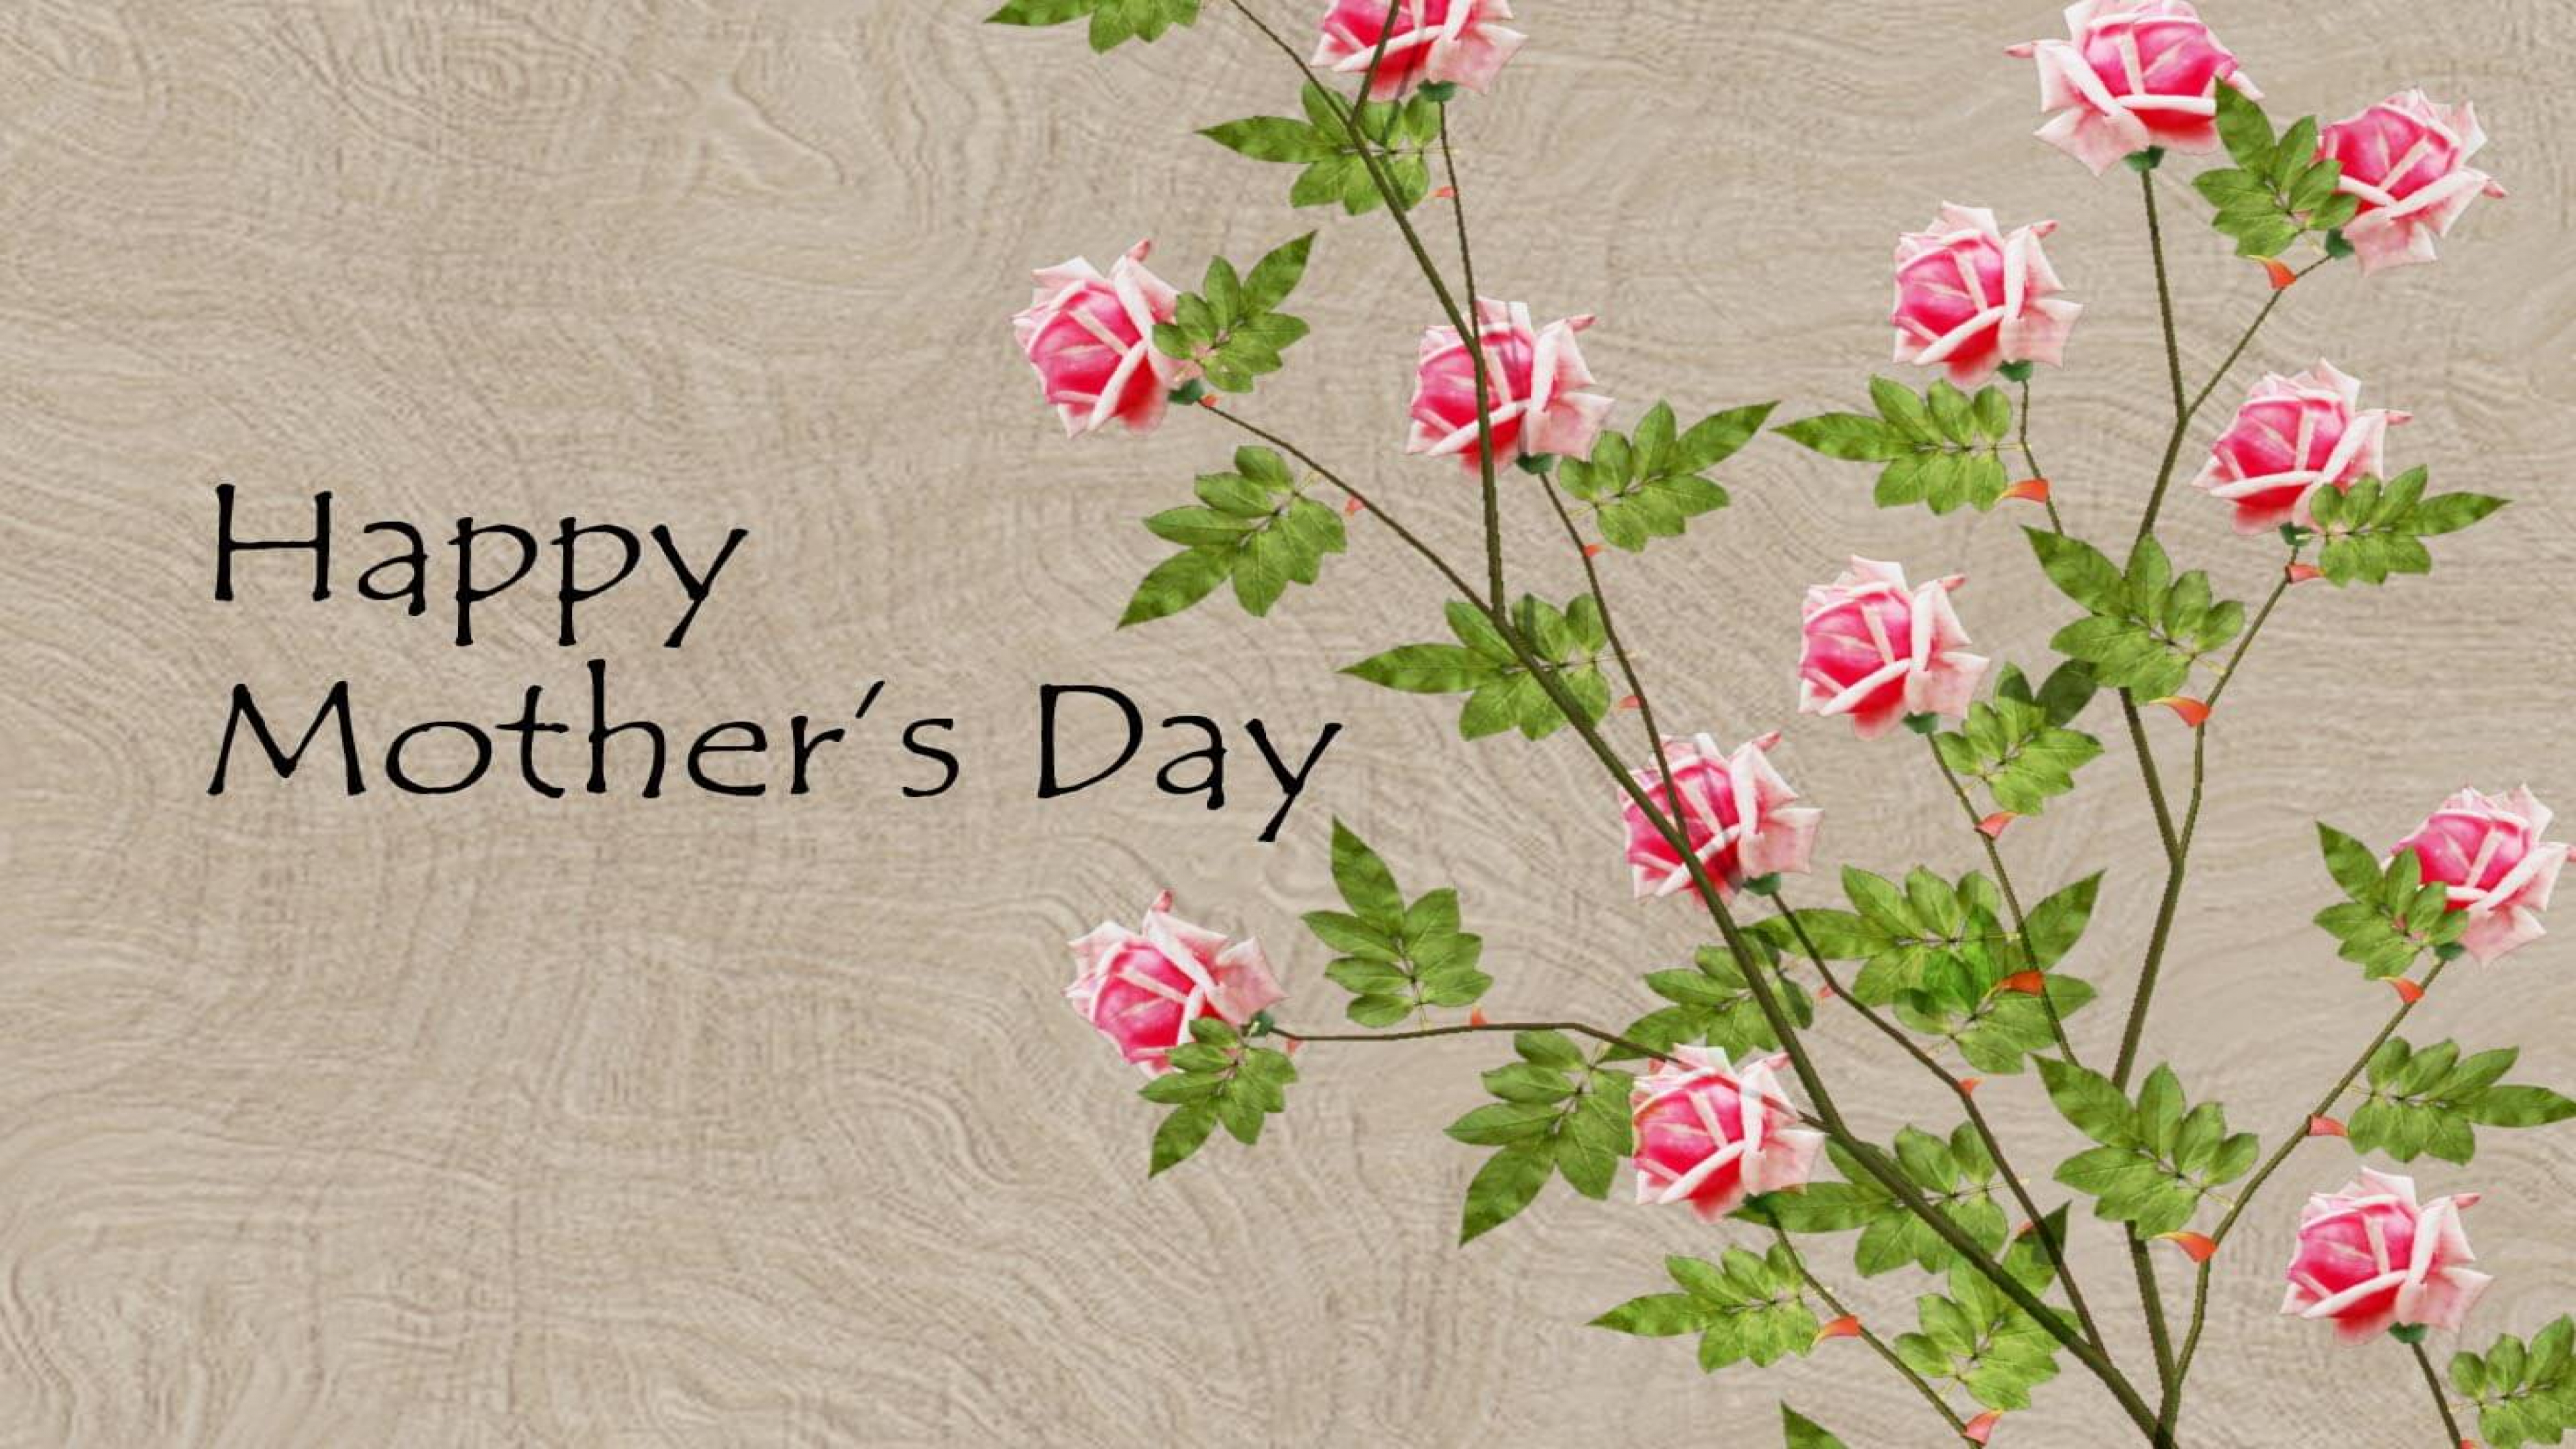 Мама на работе на английском. Happy mother s Day. Mother's Day открытка. Мазерс Дэй. Поздравление с днем матери на английском.